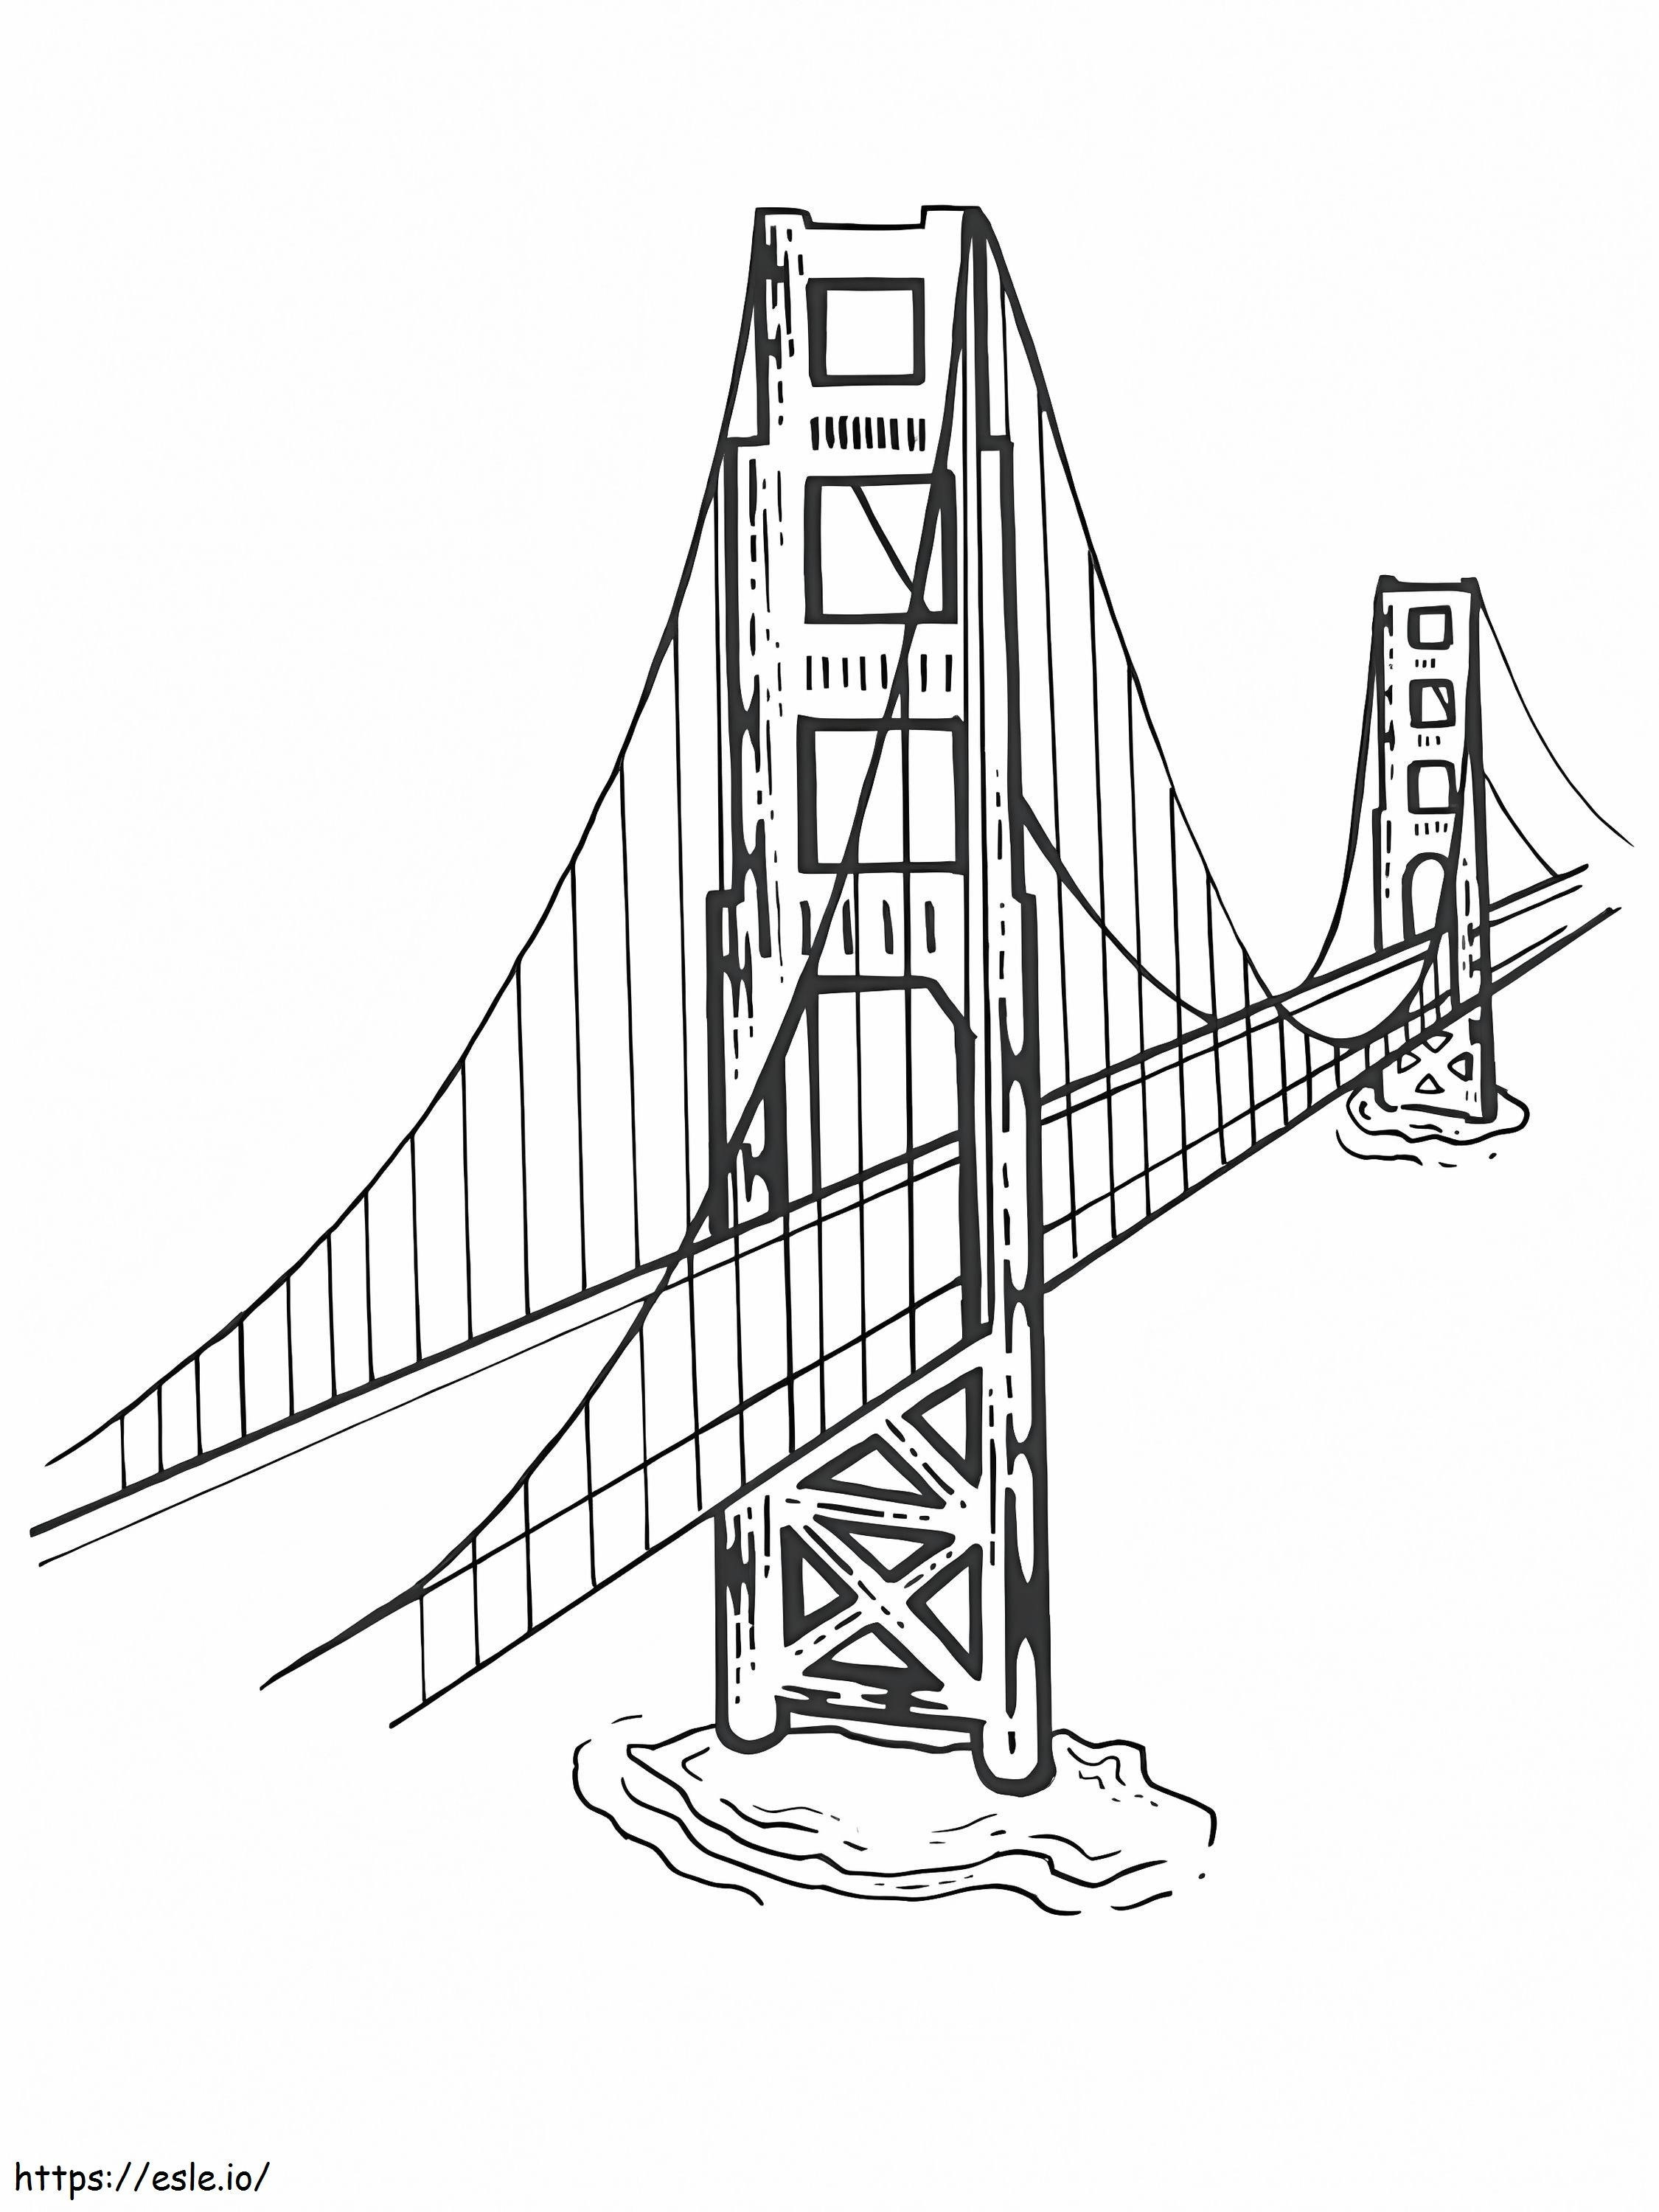 Free Printable Golden Gate Bridge coloring page